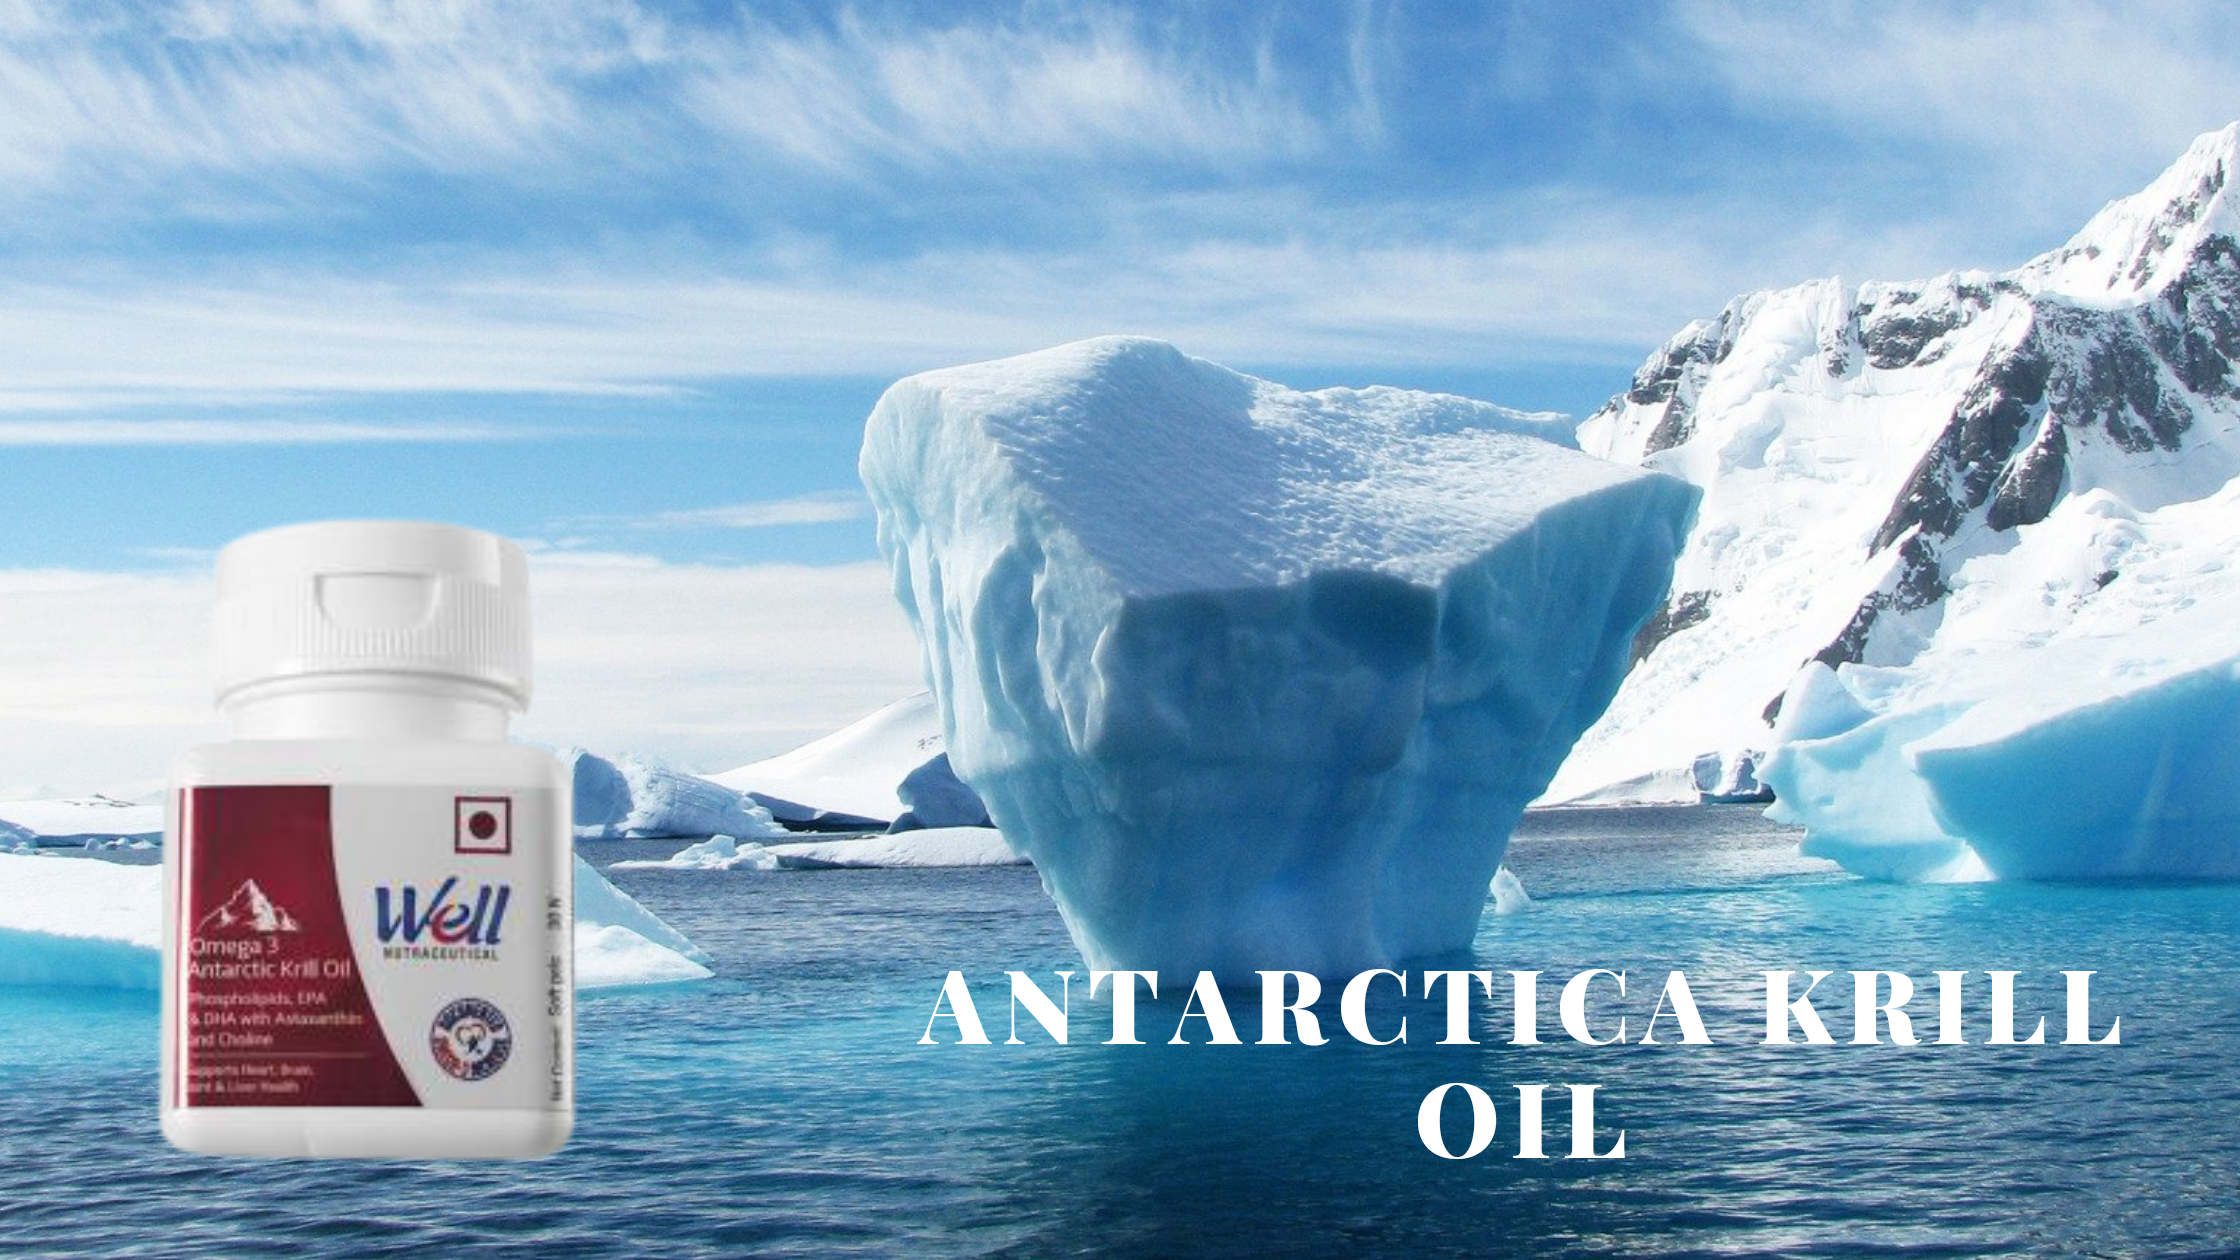 Modicare Antarctica krill oil benefits